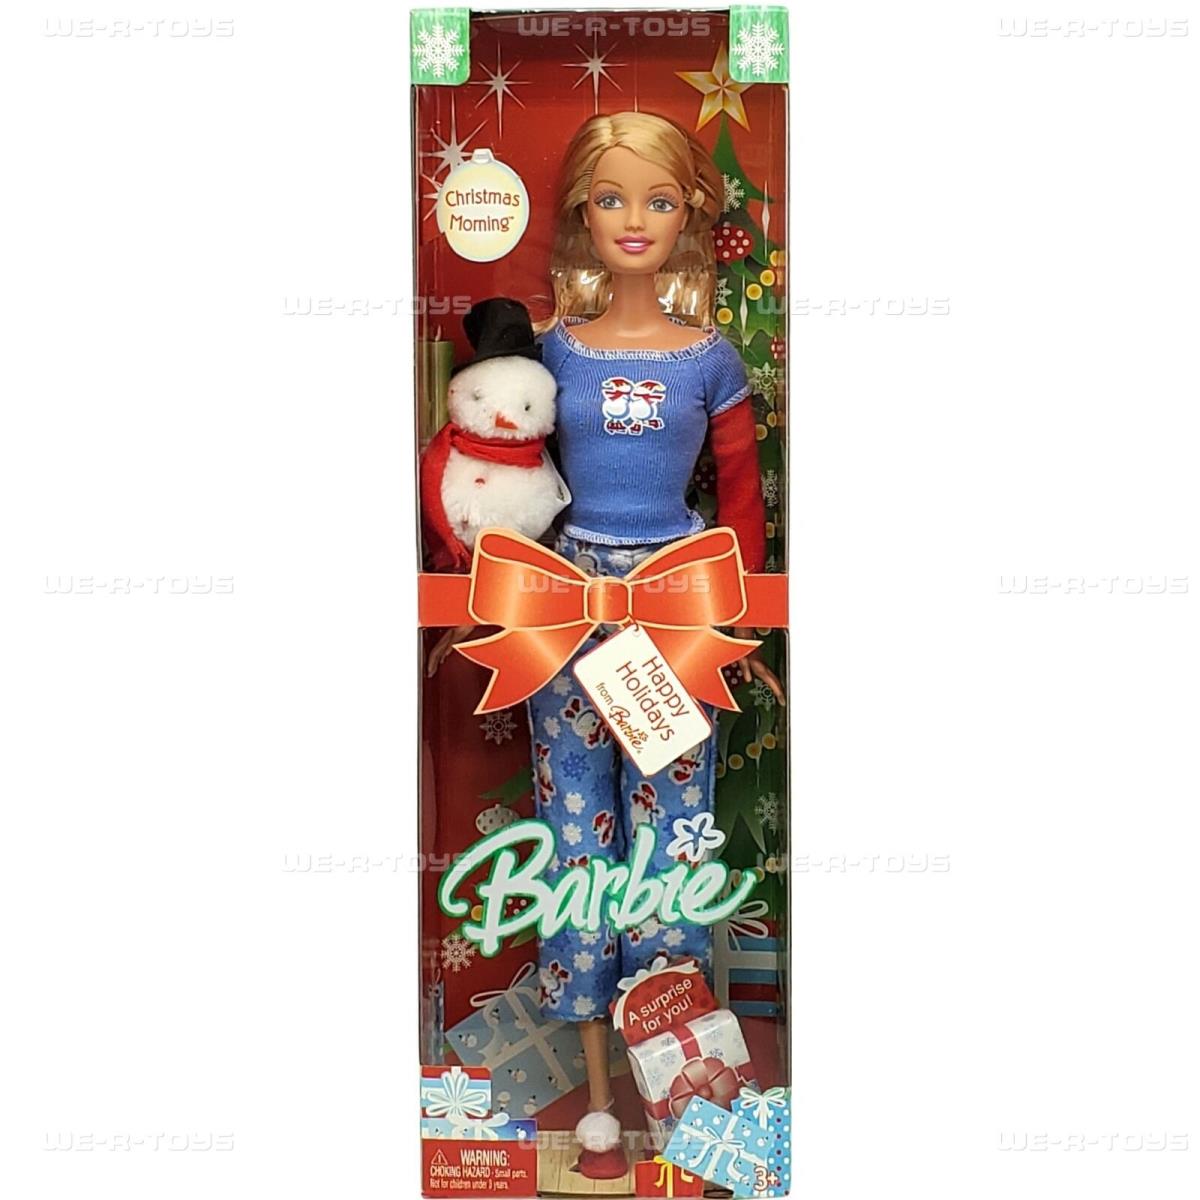 Christmas Morning Barbie Doll with Plush Miniature Snowman 2005 Mattel G8541